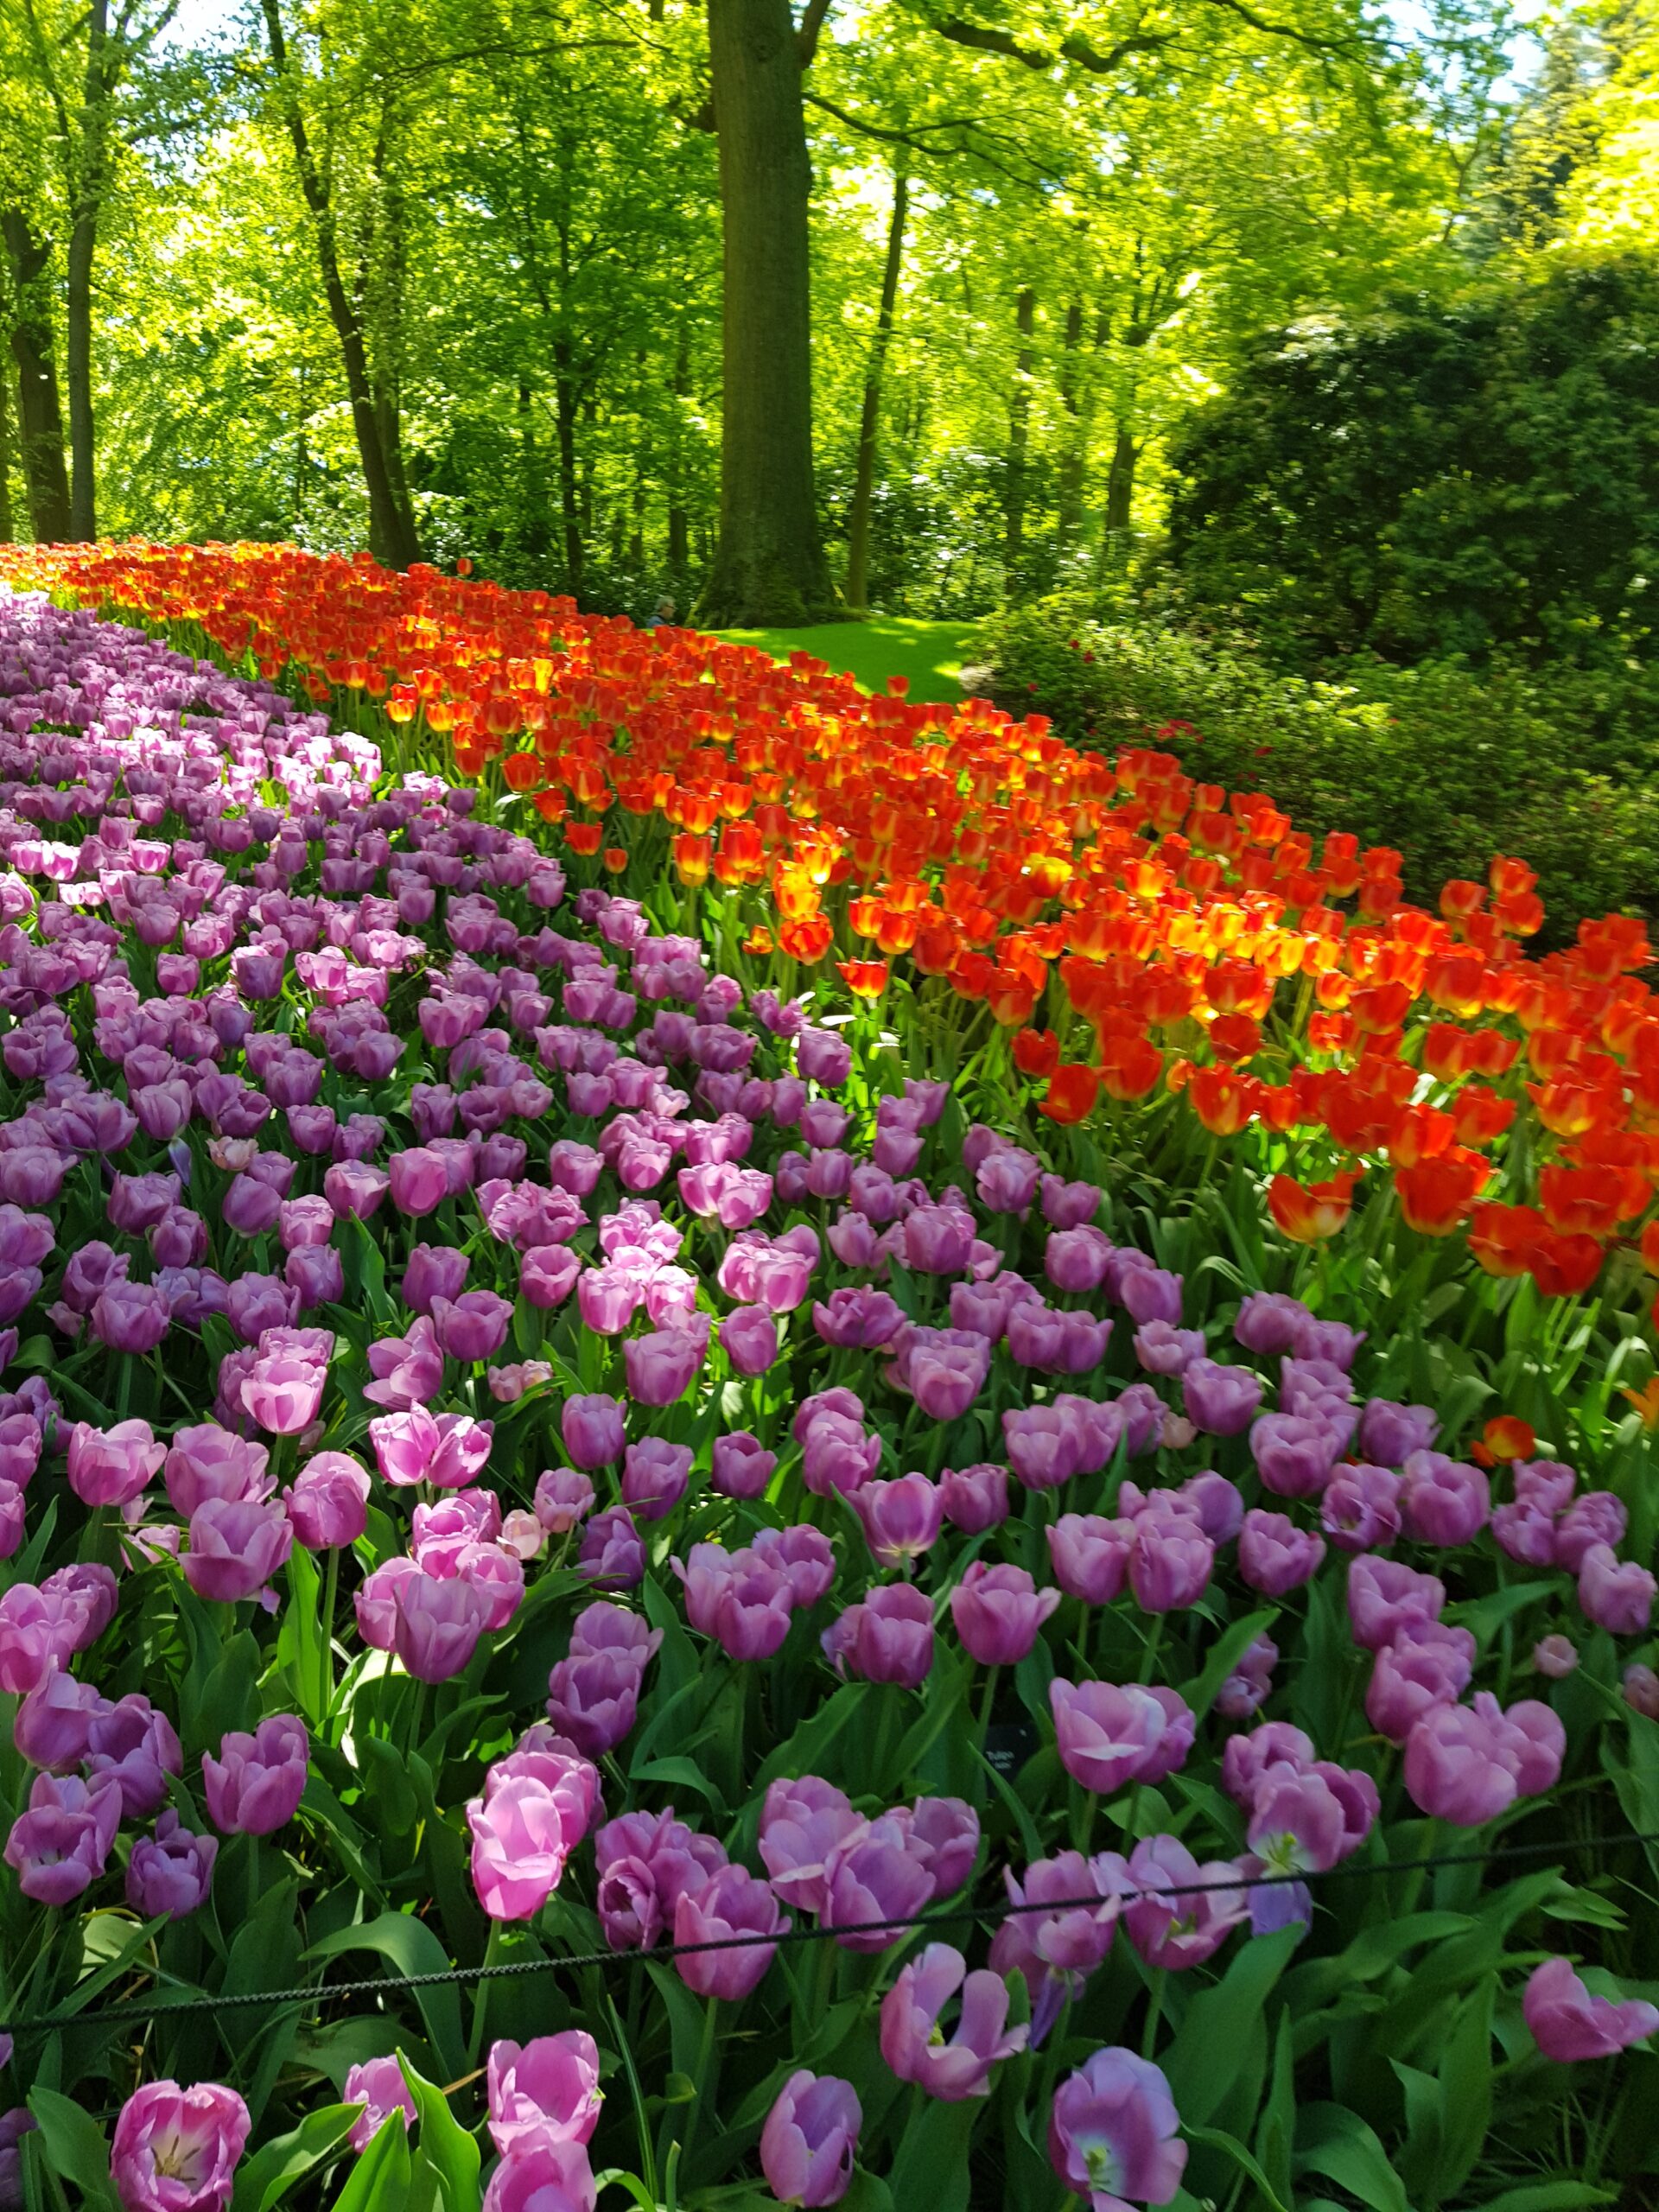 Keukenhof Garden: The Floral Wonderland of the Netherlands